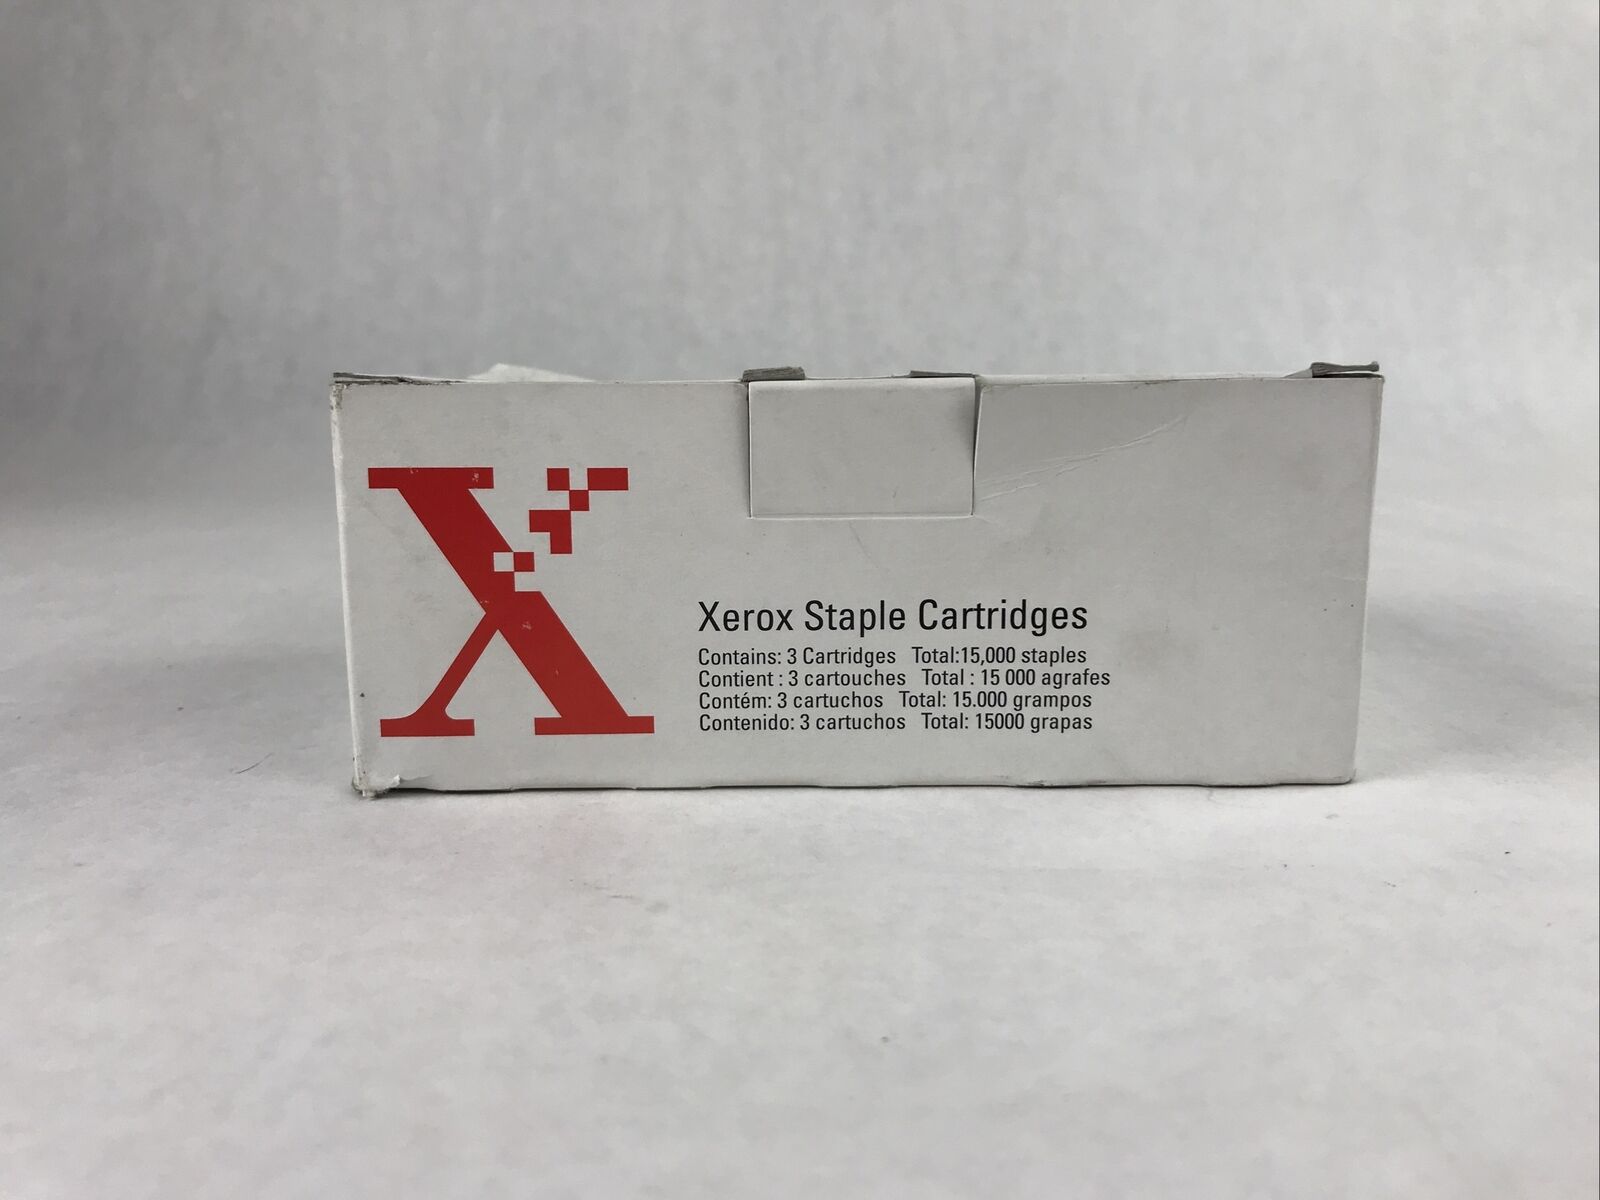 Genuine Xerox 108R00493 Staple Cartridges